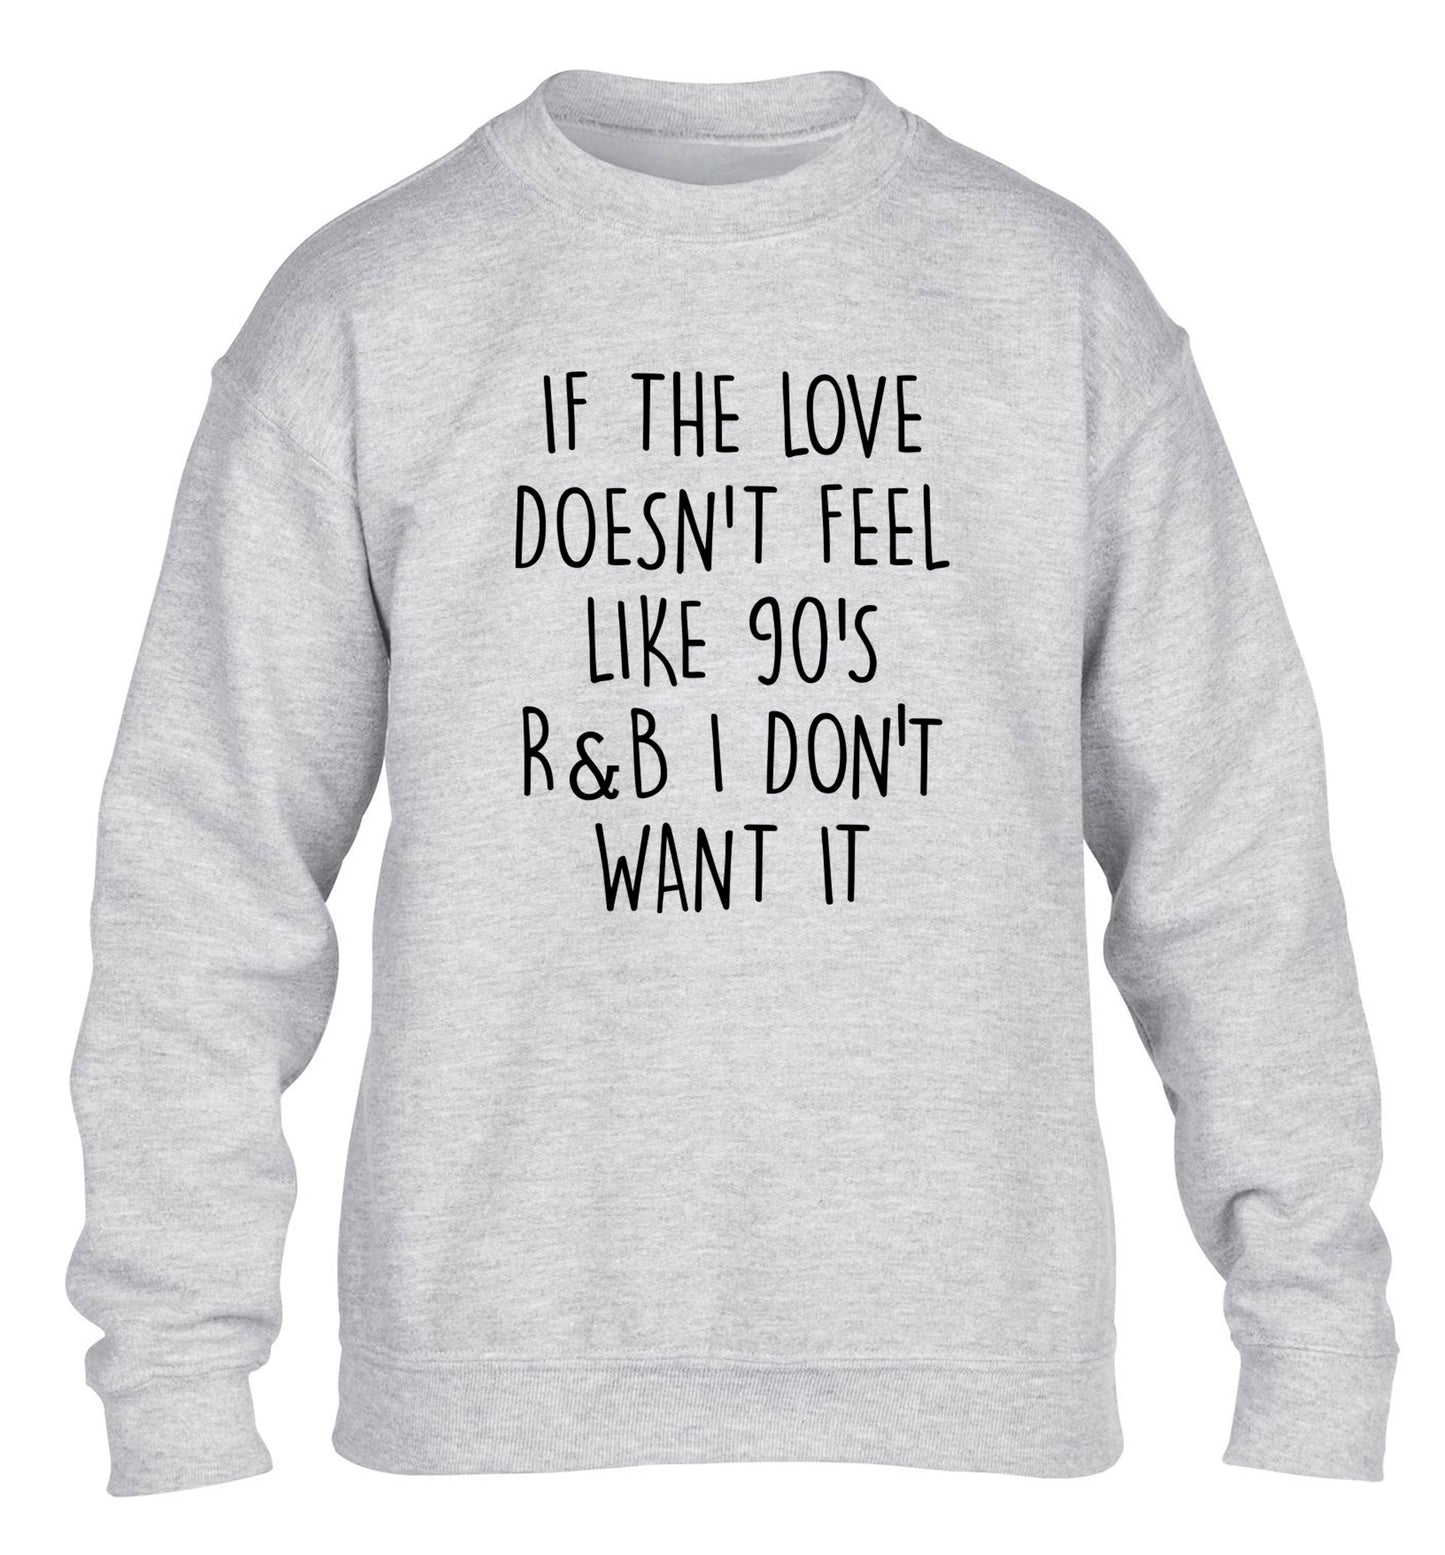 If the love doesn't feel like 90's R&B I don't want it children's grey sweater 12-14 Years